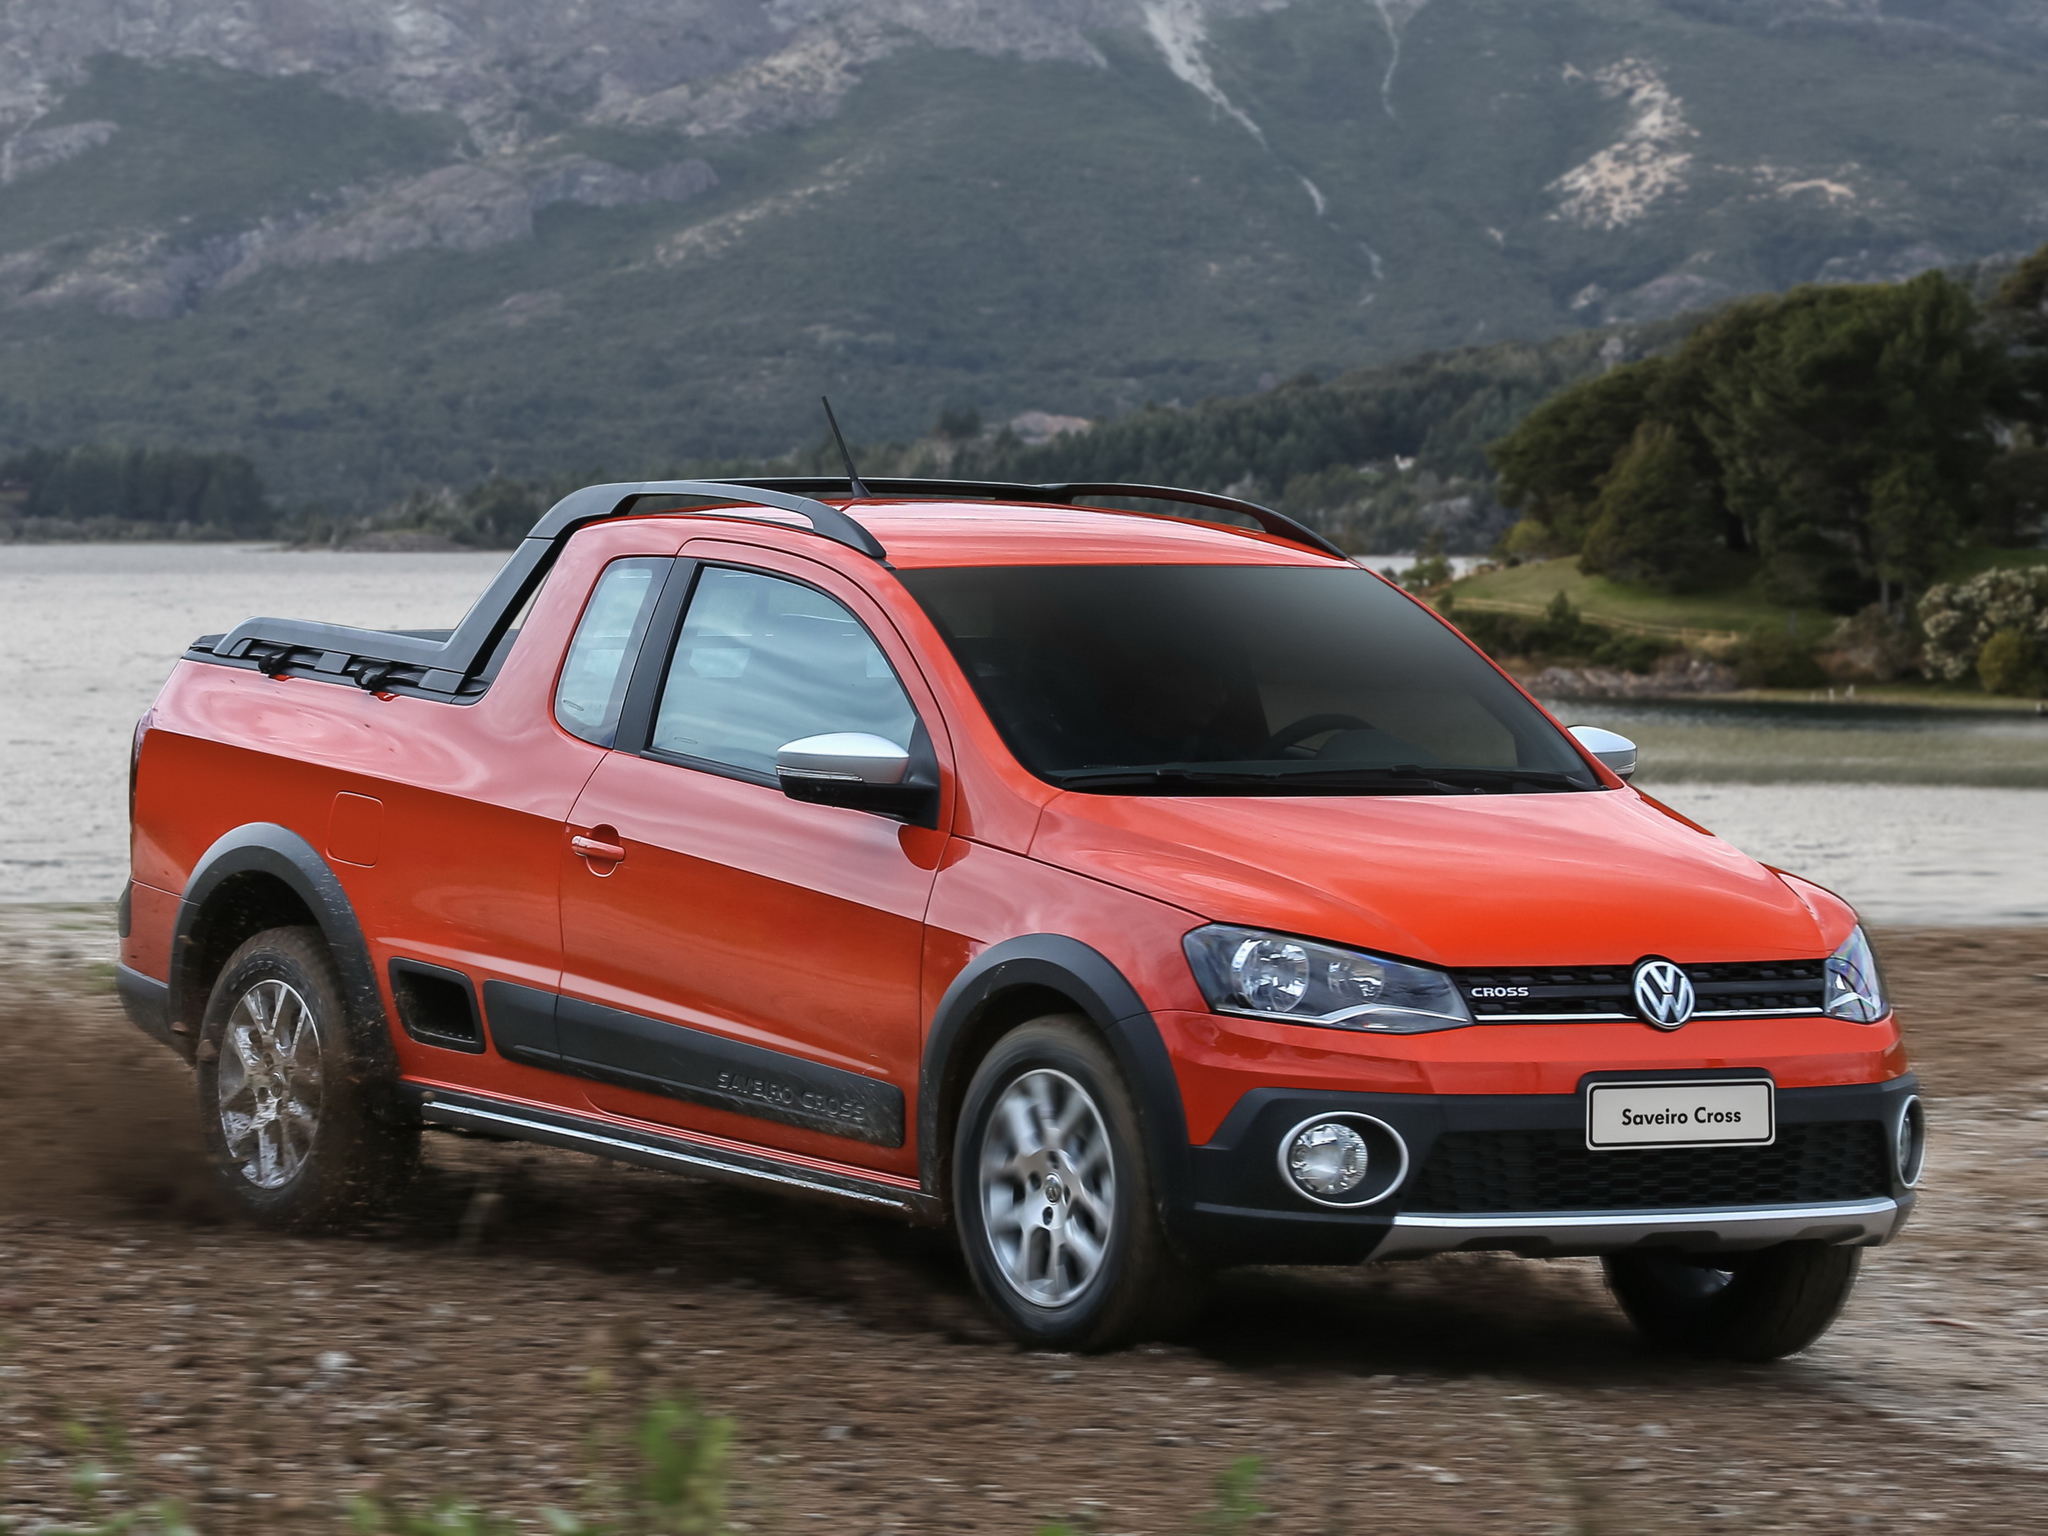 2014 Volkswagen Saveiro Cross Pickup Gets Crew Cab Version in Brazil -  autoevolution